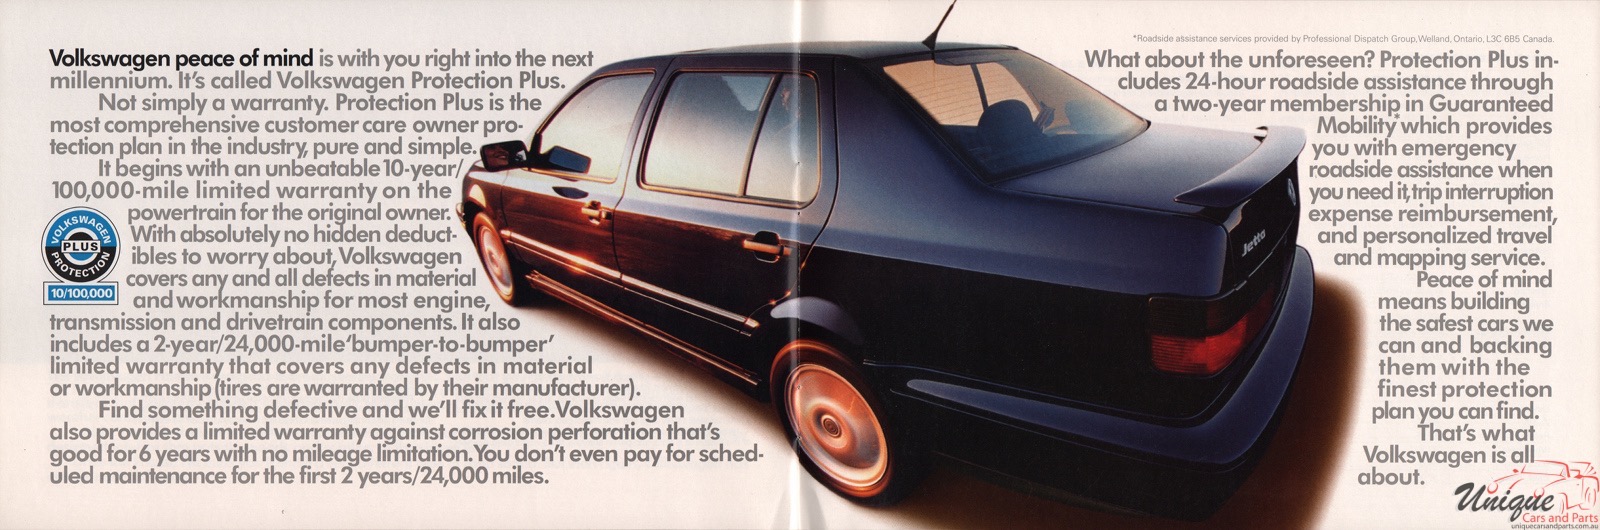 1995 VW Lineup Brochure Page 7